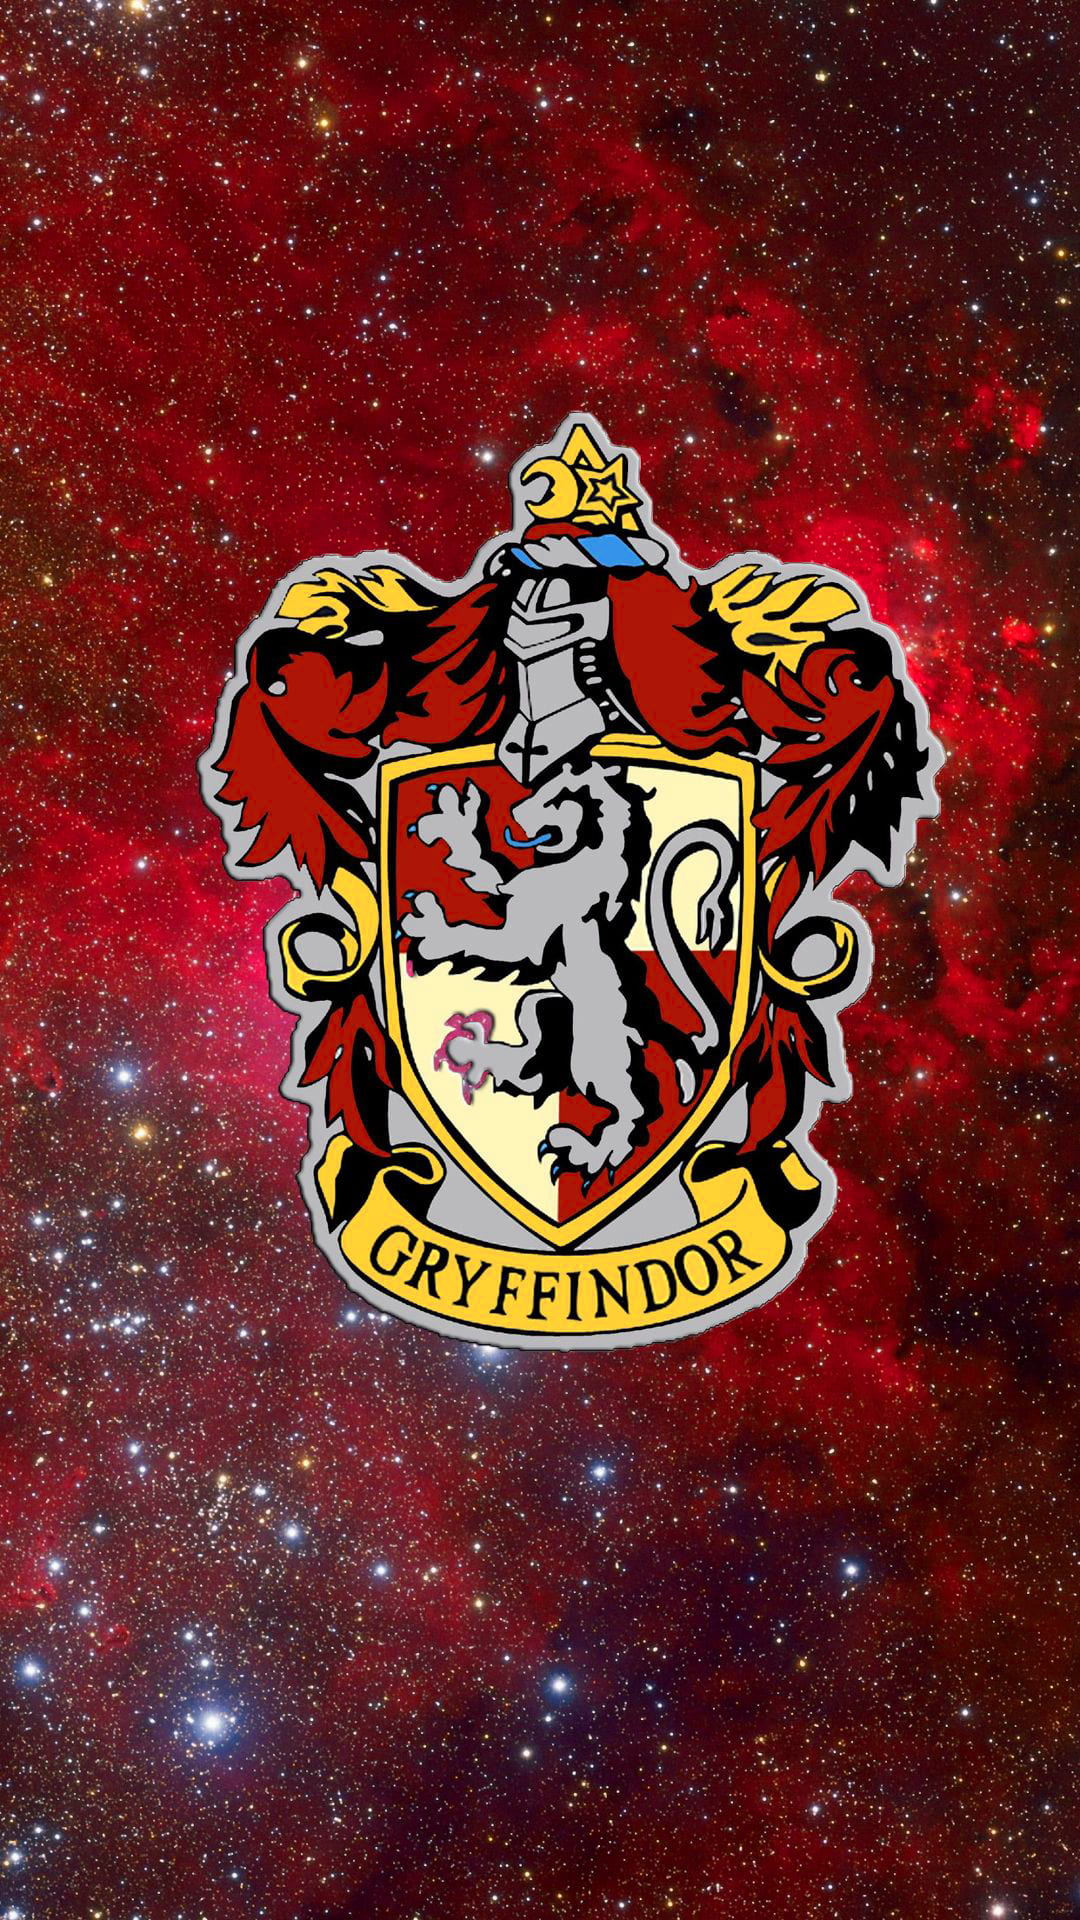 The hogwarts crest on a starry background - Gryffindor